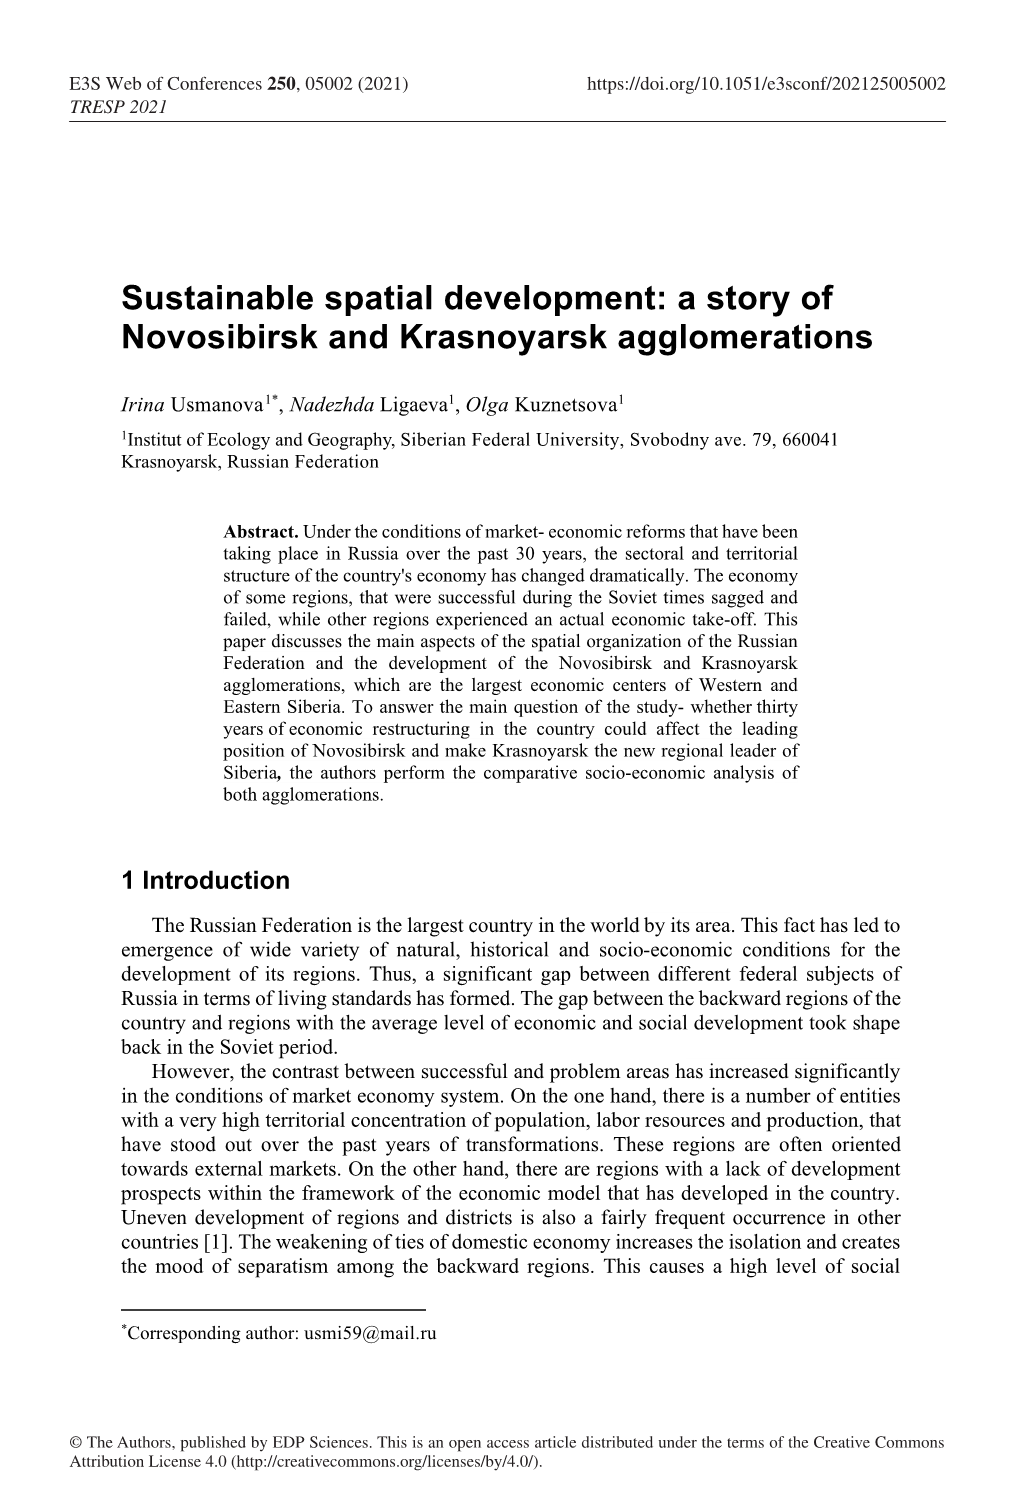 Sustainable Spatial Development: a Story of Novosibirsk and Krasnoyarsk Agglomerations